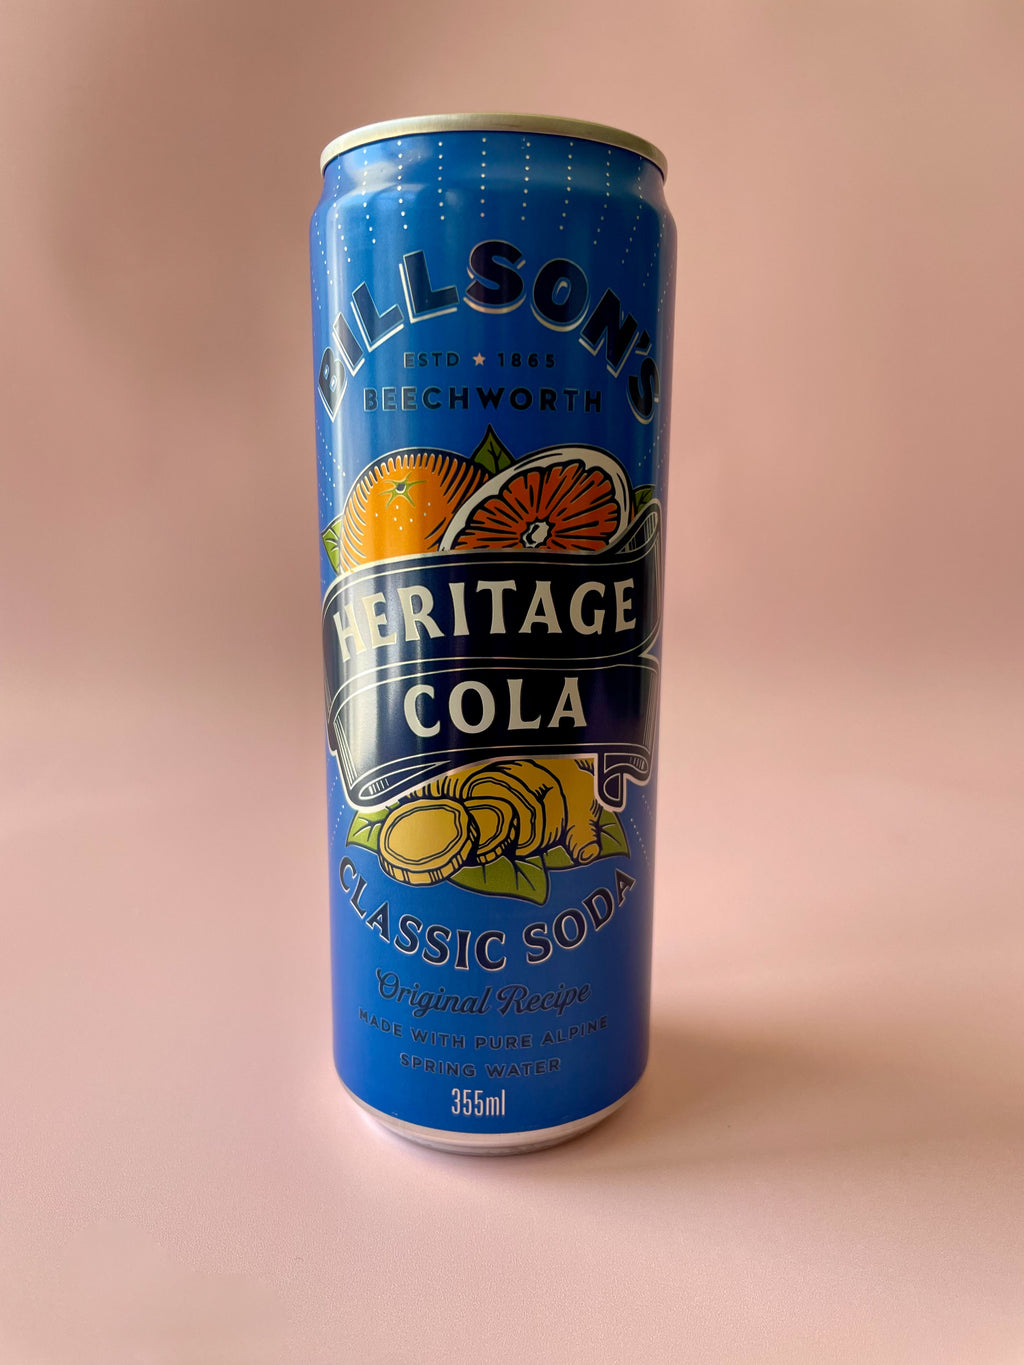 Billson's Heritage Cola Classic Soda